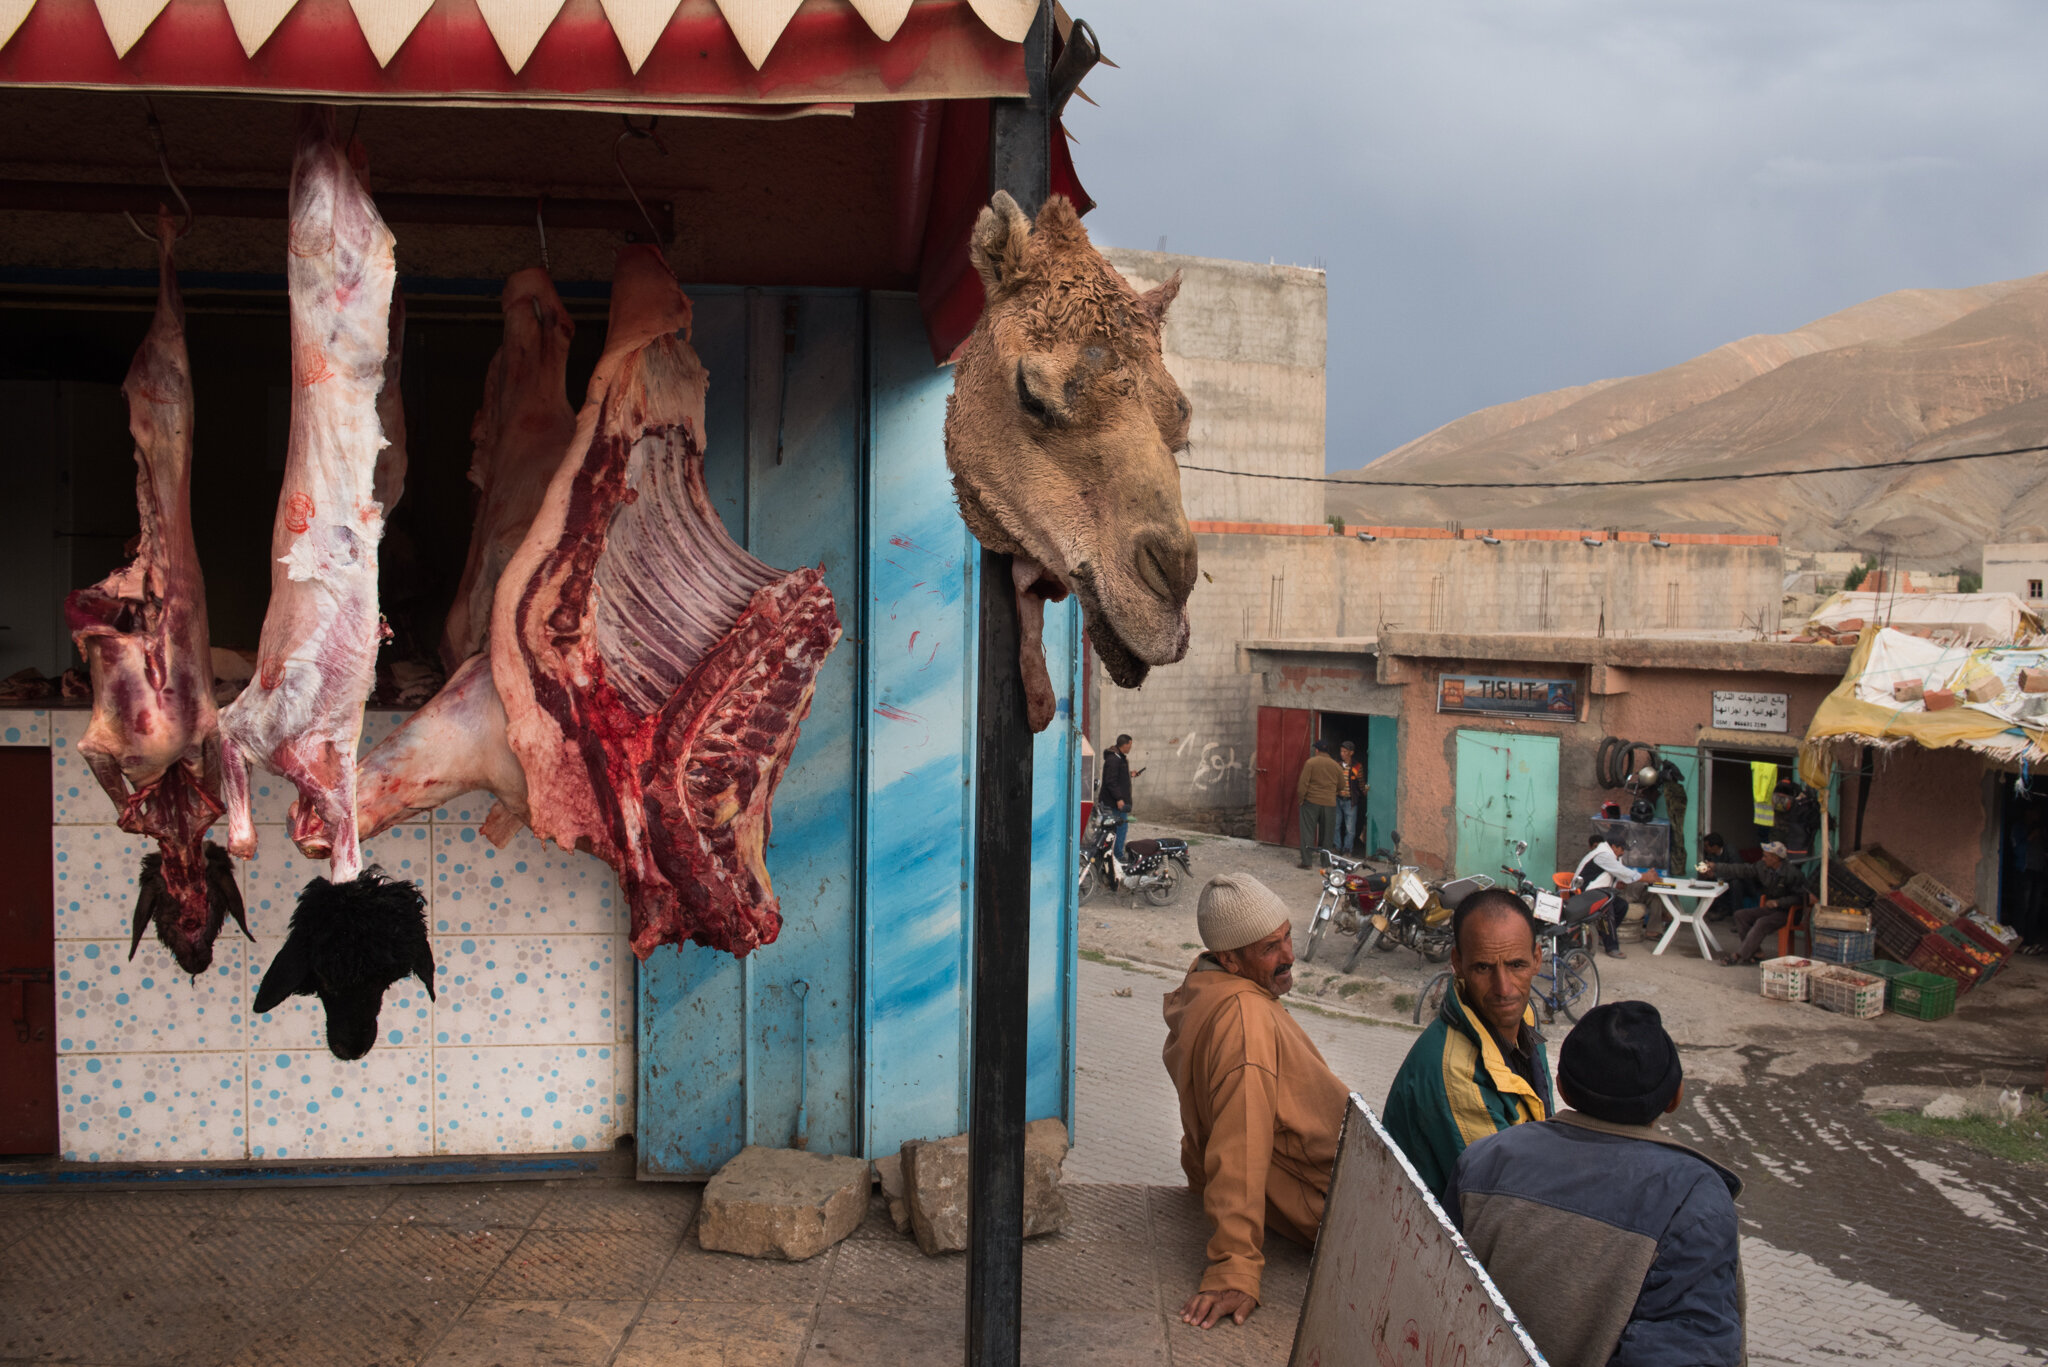    Morocco - Imilchil    Outside butcher shop 